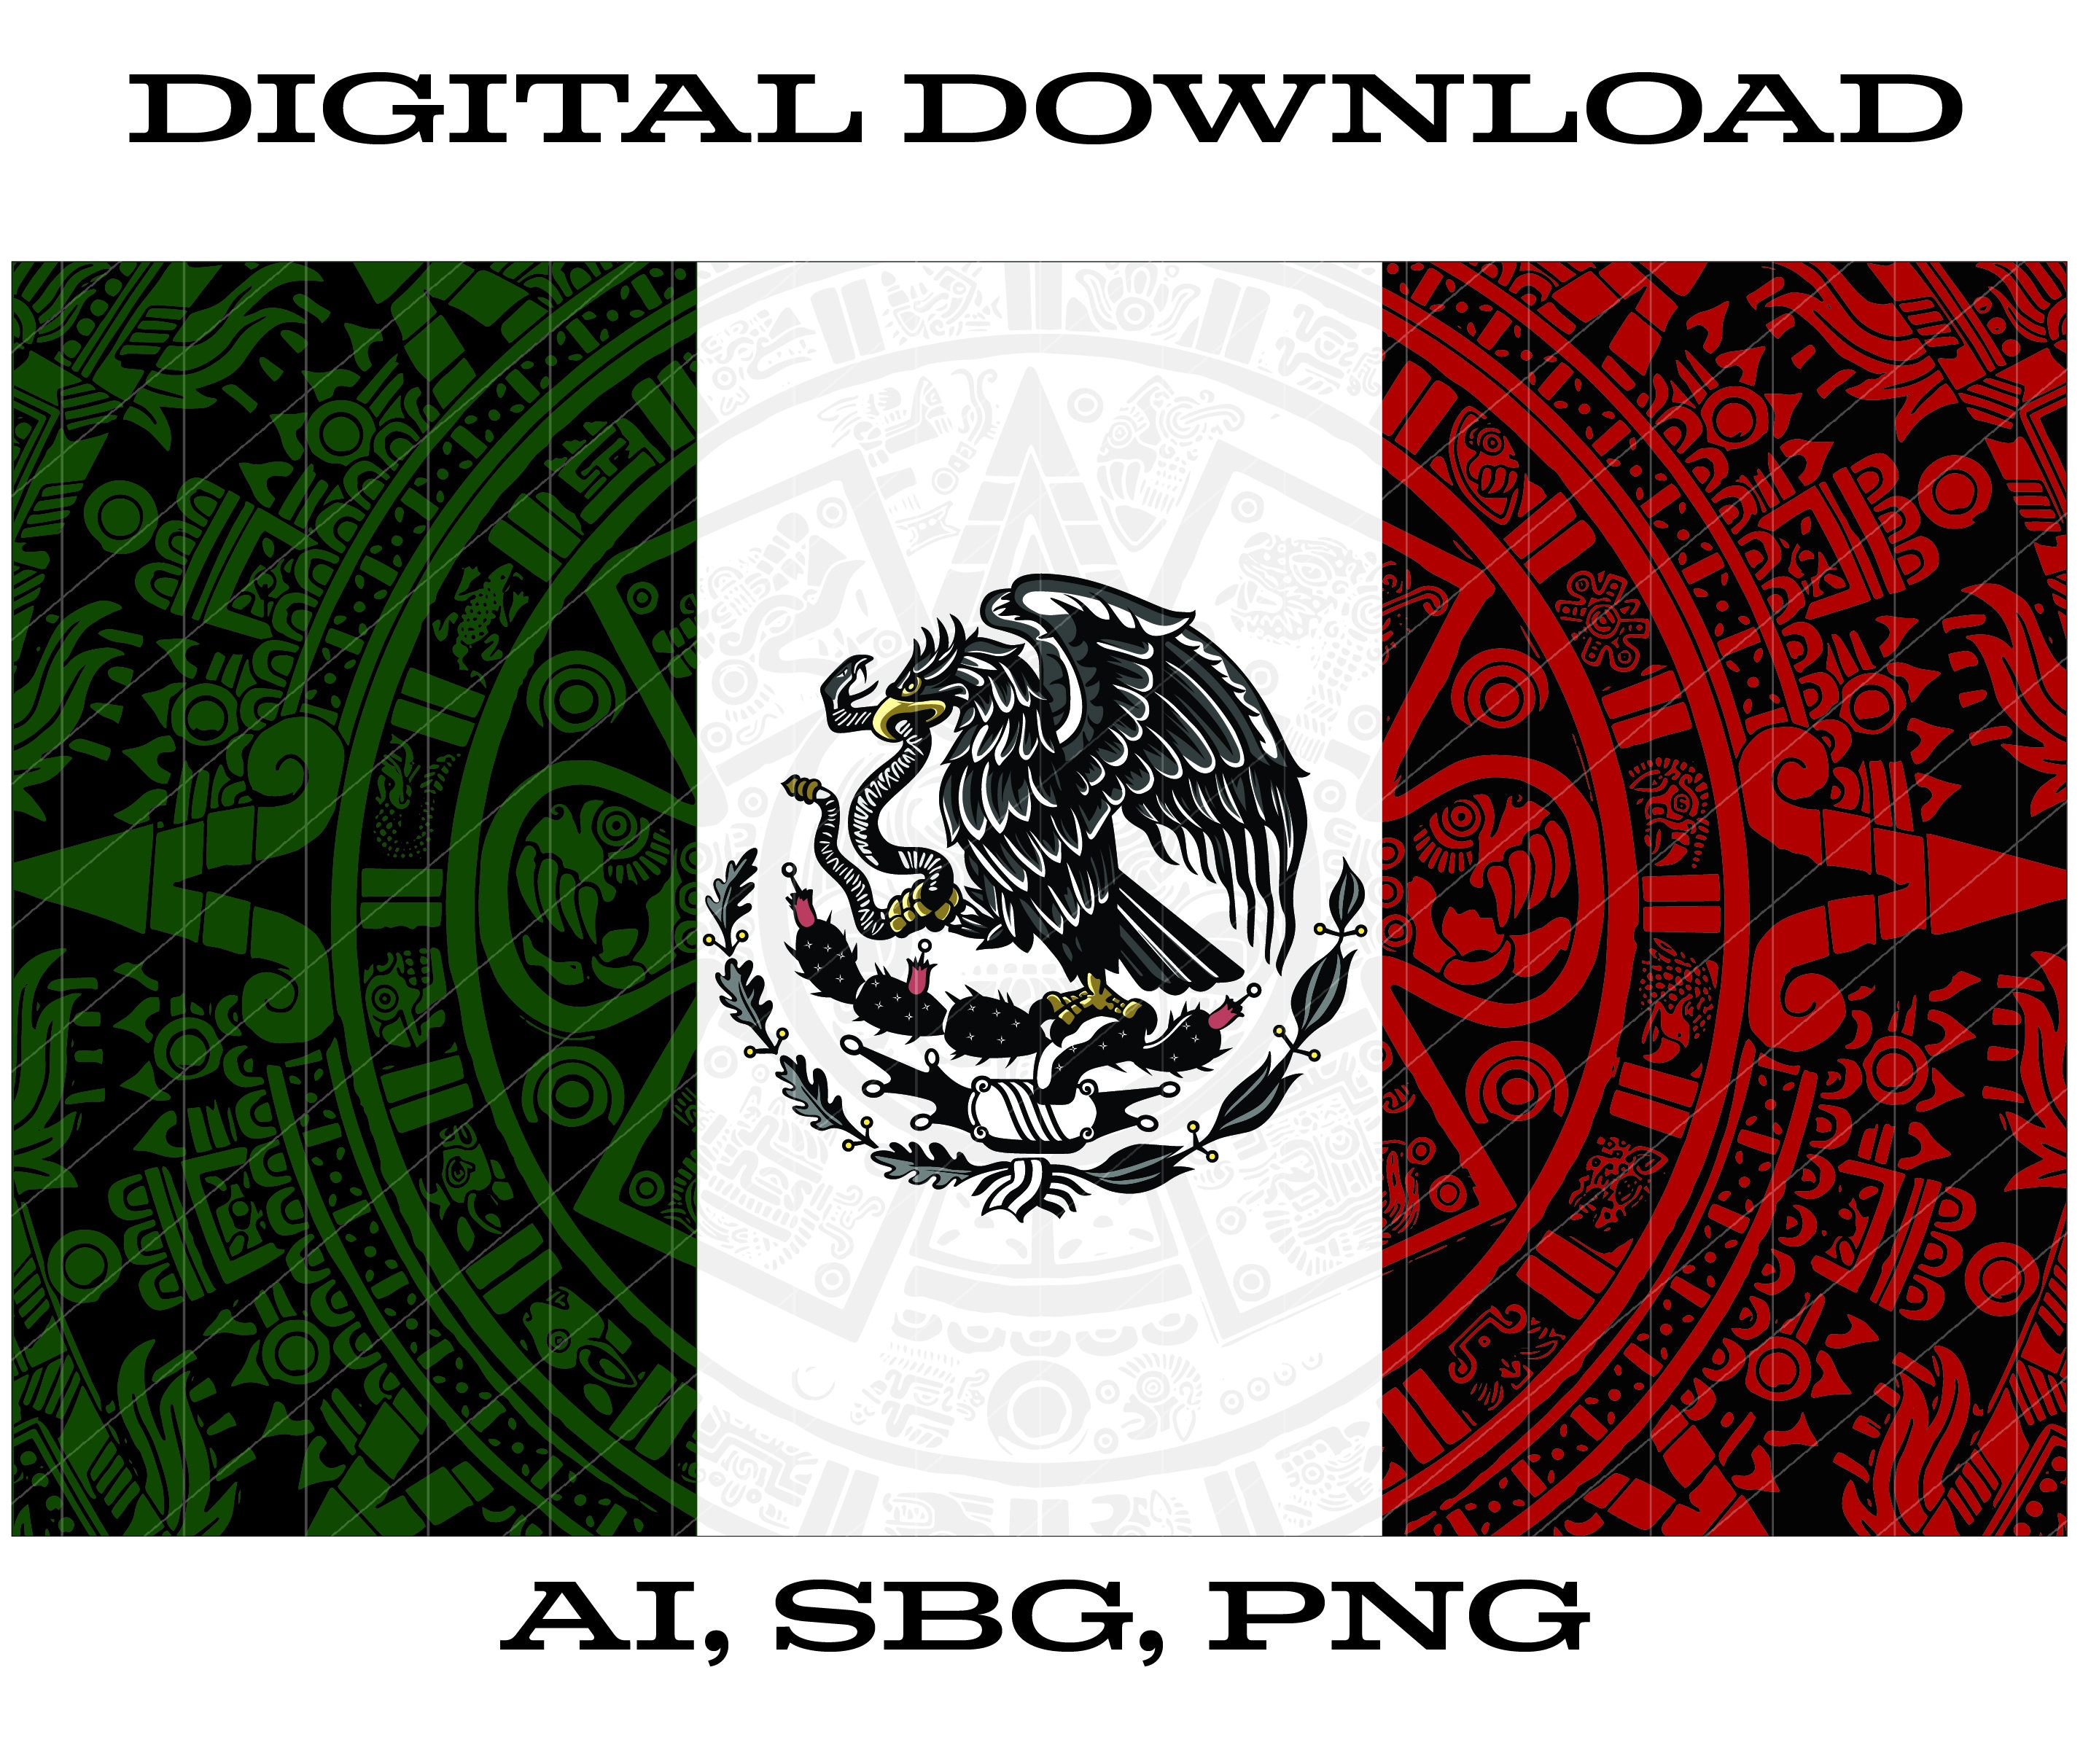 Bandera de Mexico - Mexican Flag 2013 Laminated Poster Print (36 x 24)